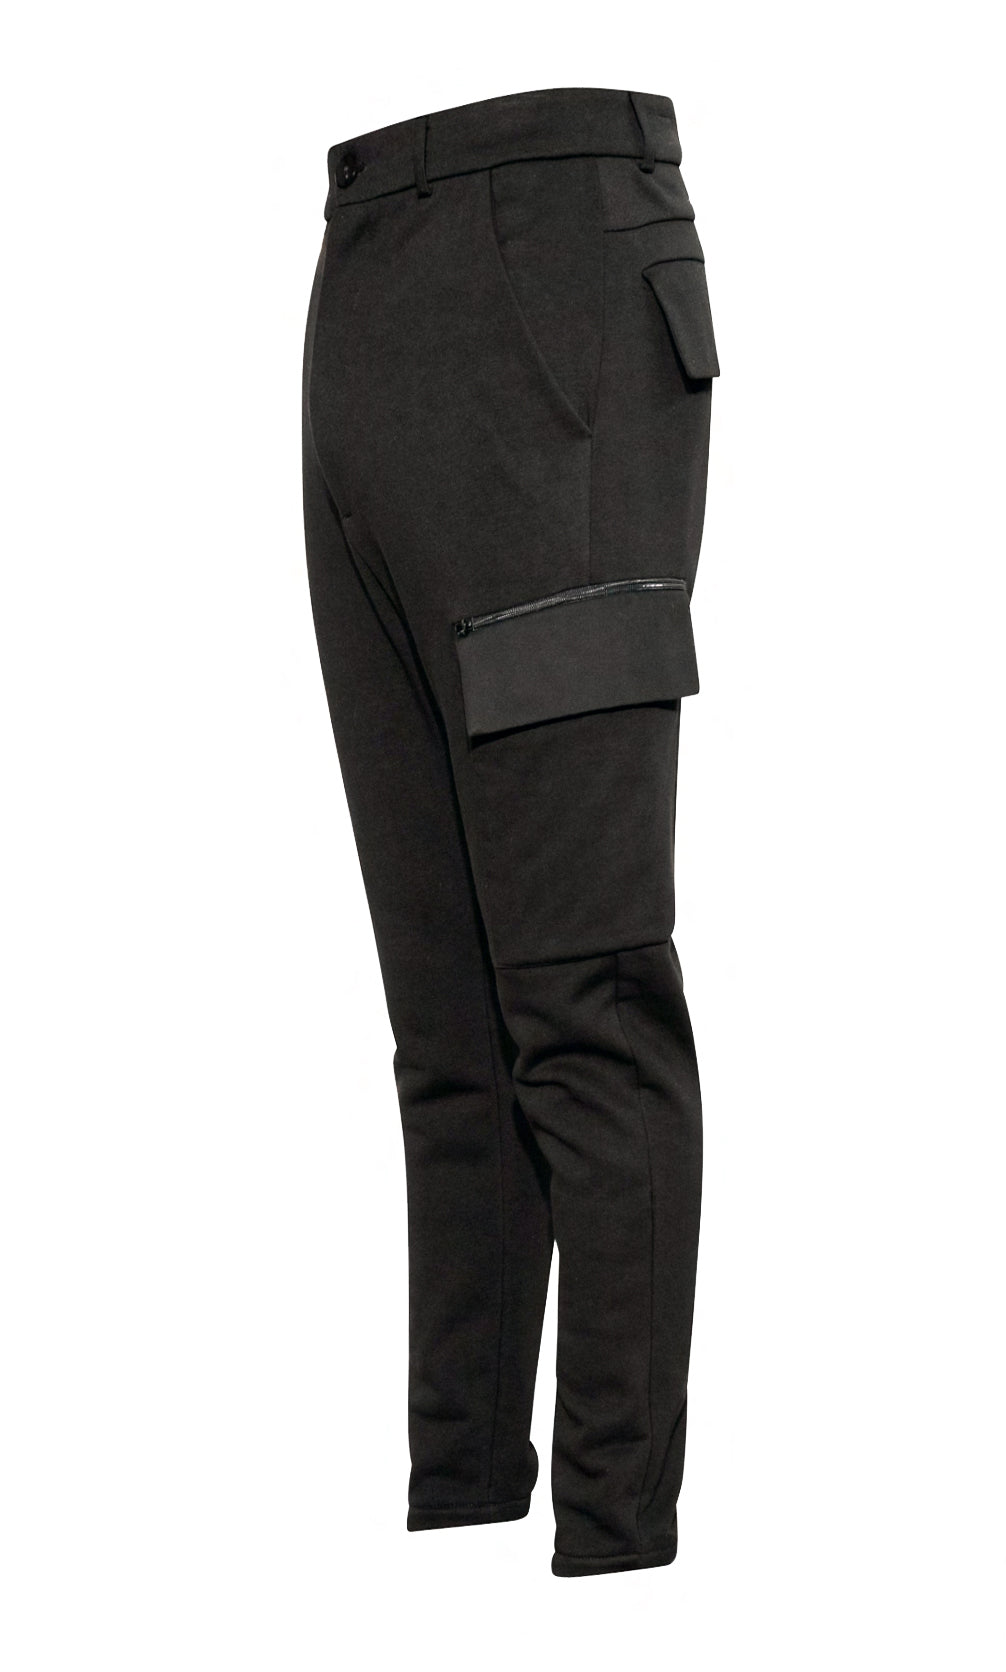 adddress pants with side pocket